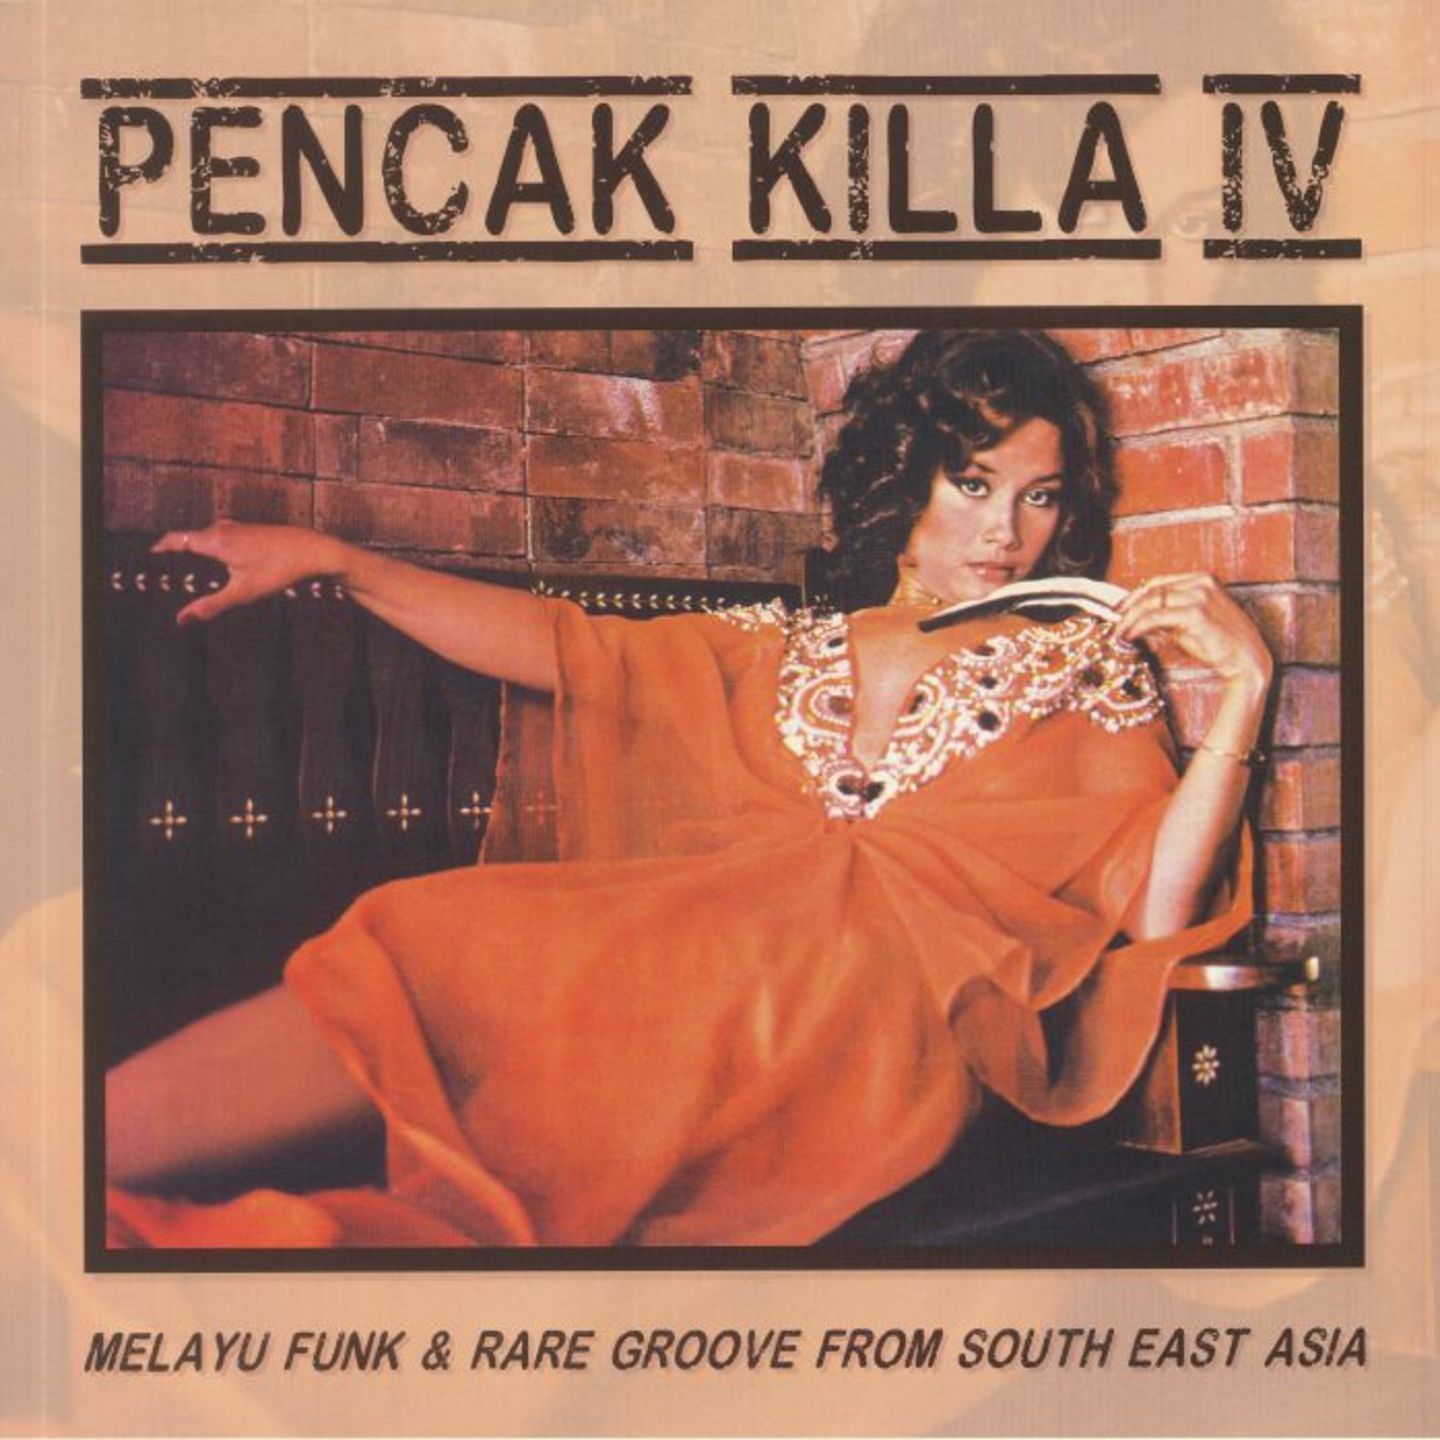 VA - Pencak Killa IV Melayu Funk & Rare Groove From South East Asia LP